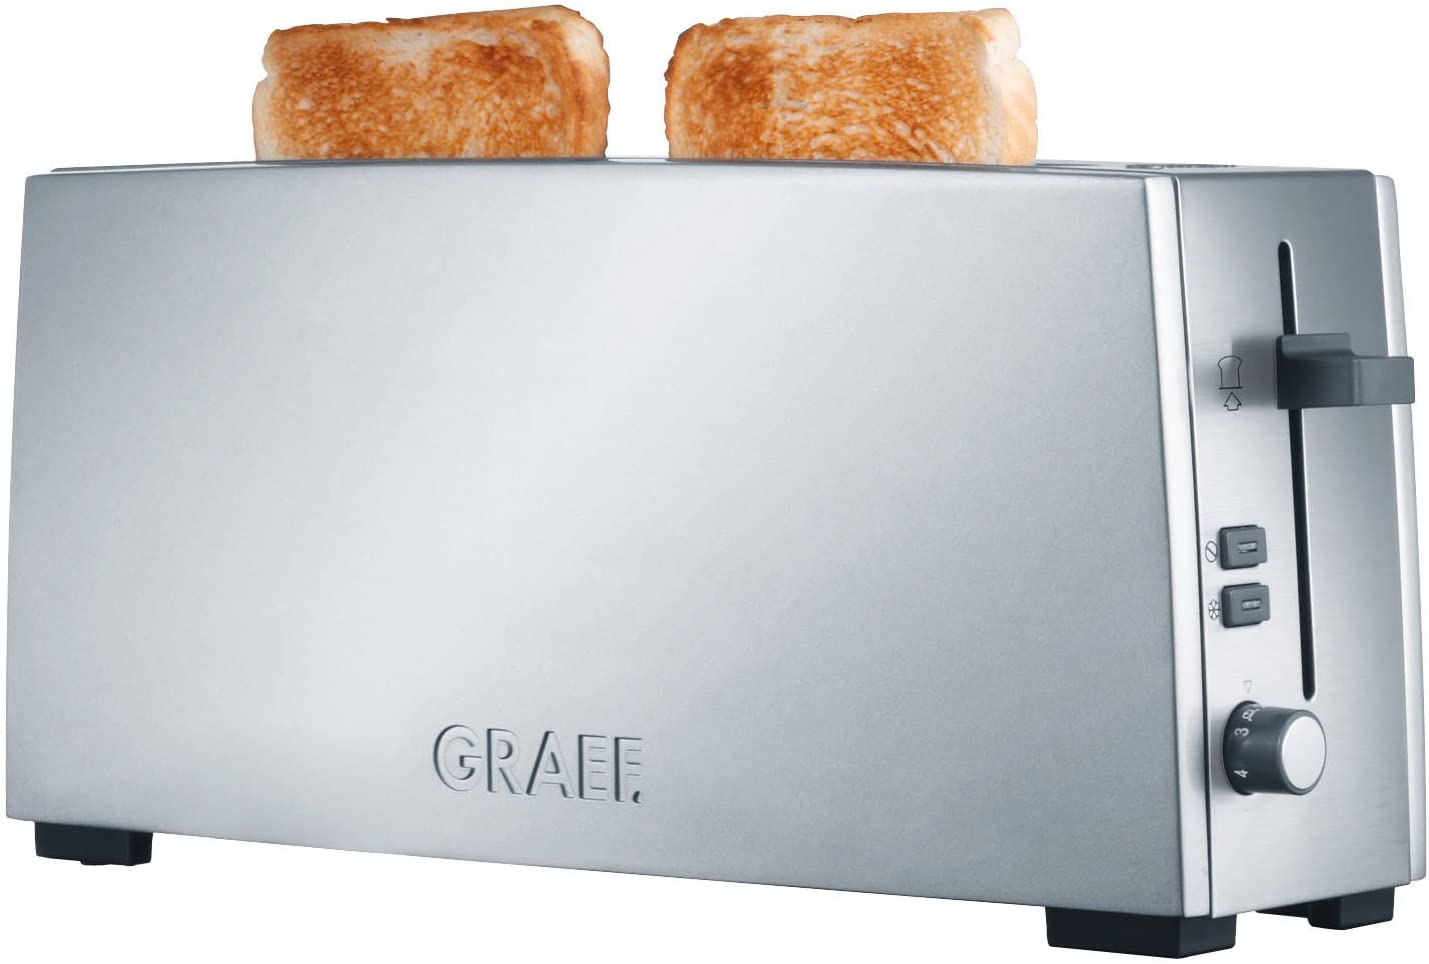 Graef Matt Brushed Long Slot Stainless Steel Toaster